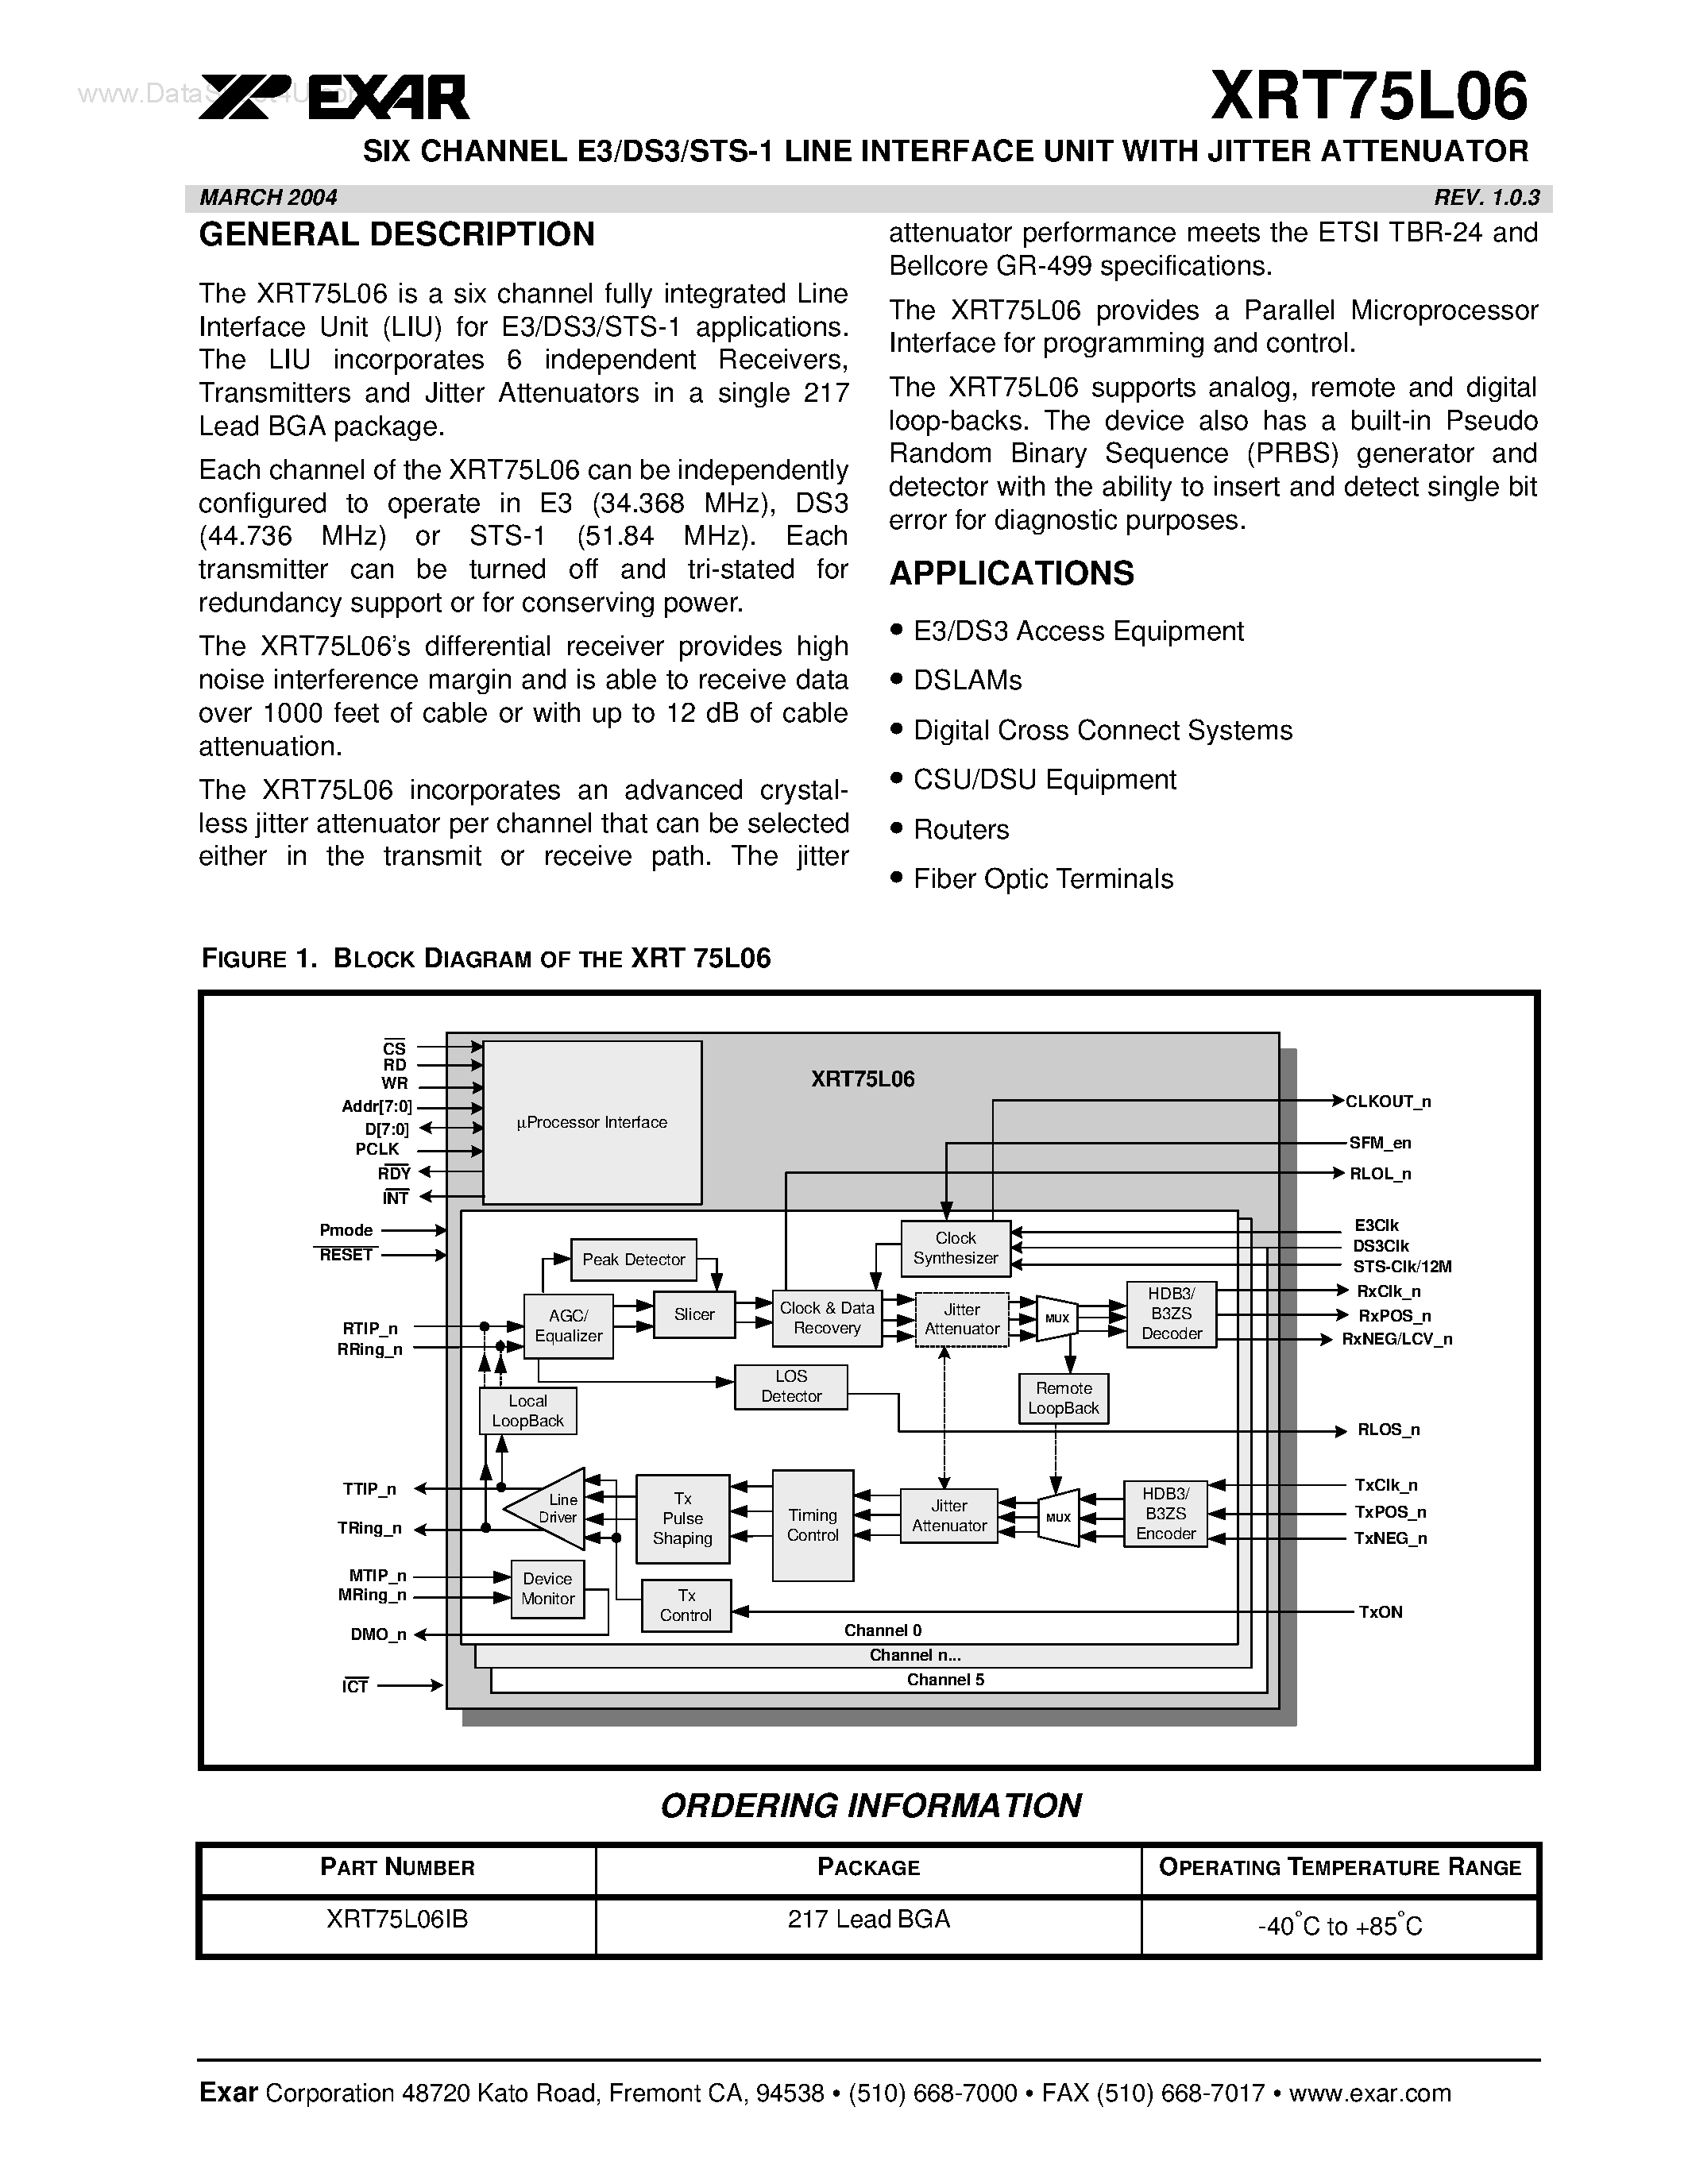 Datasheet XRT75L06 - SIX CHANNEL E3/DS3/STS-1 LINE INTERFACE UNIT page 1